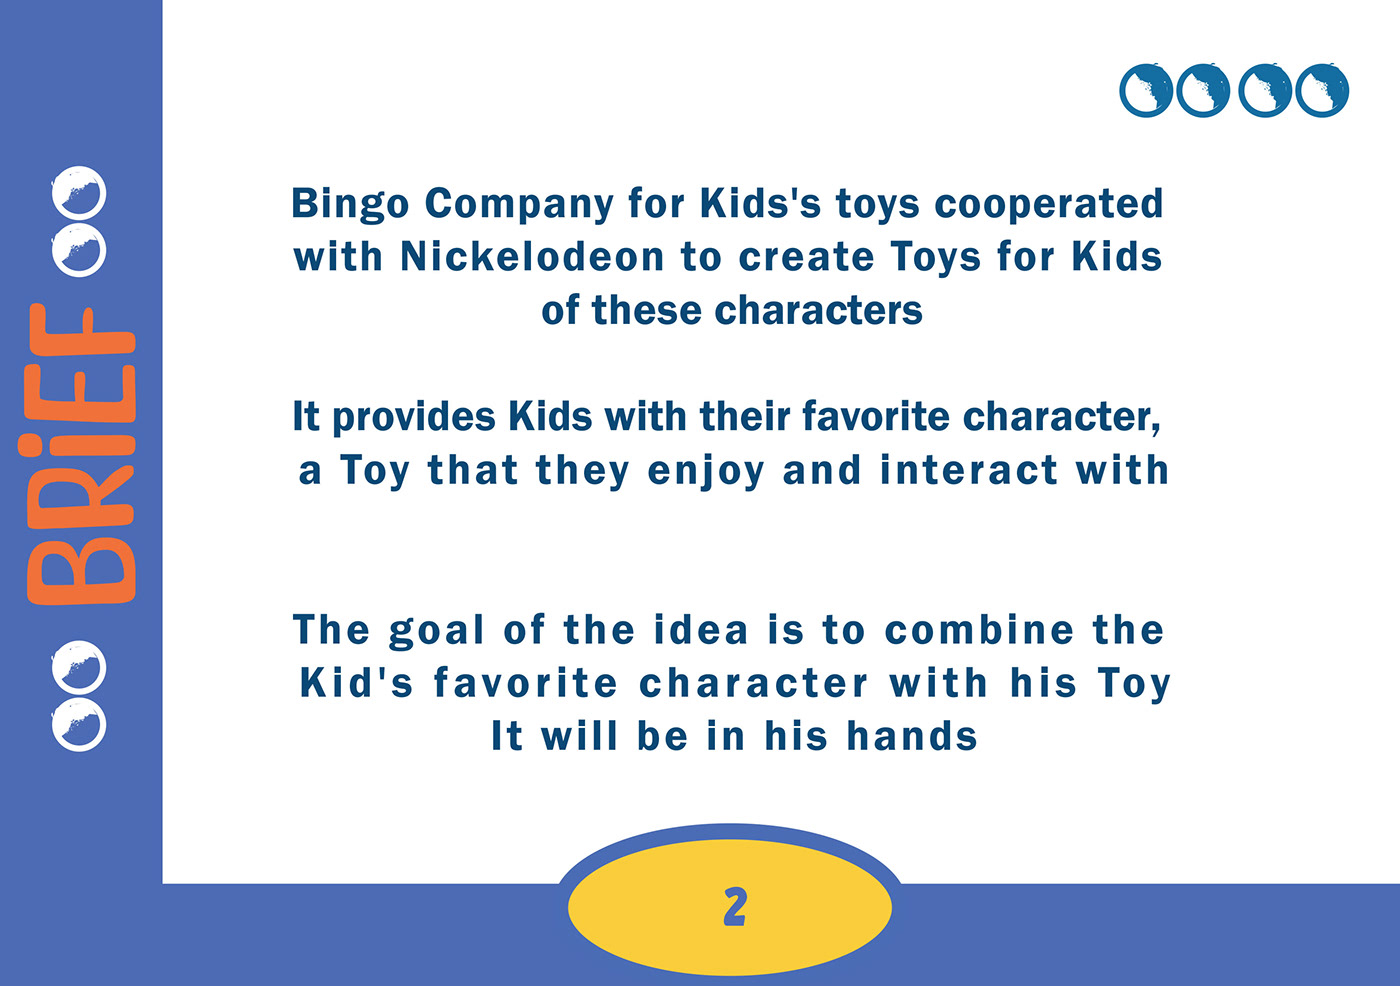 bingo toys toyota kids book illustration charachters Graguation project nicolodine